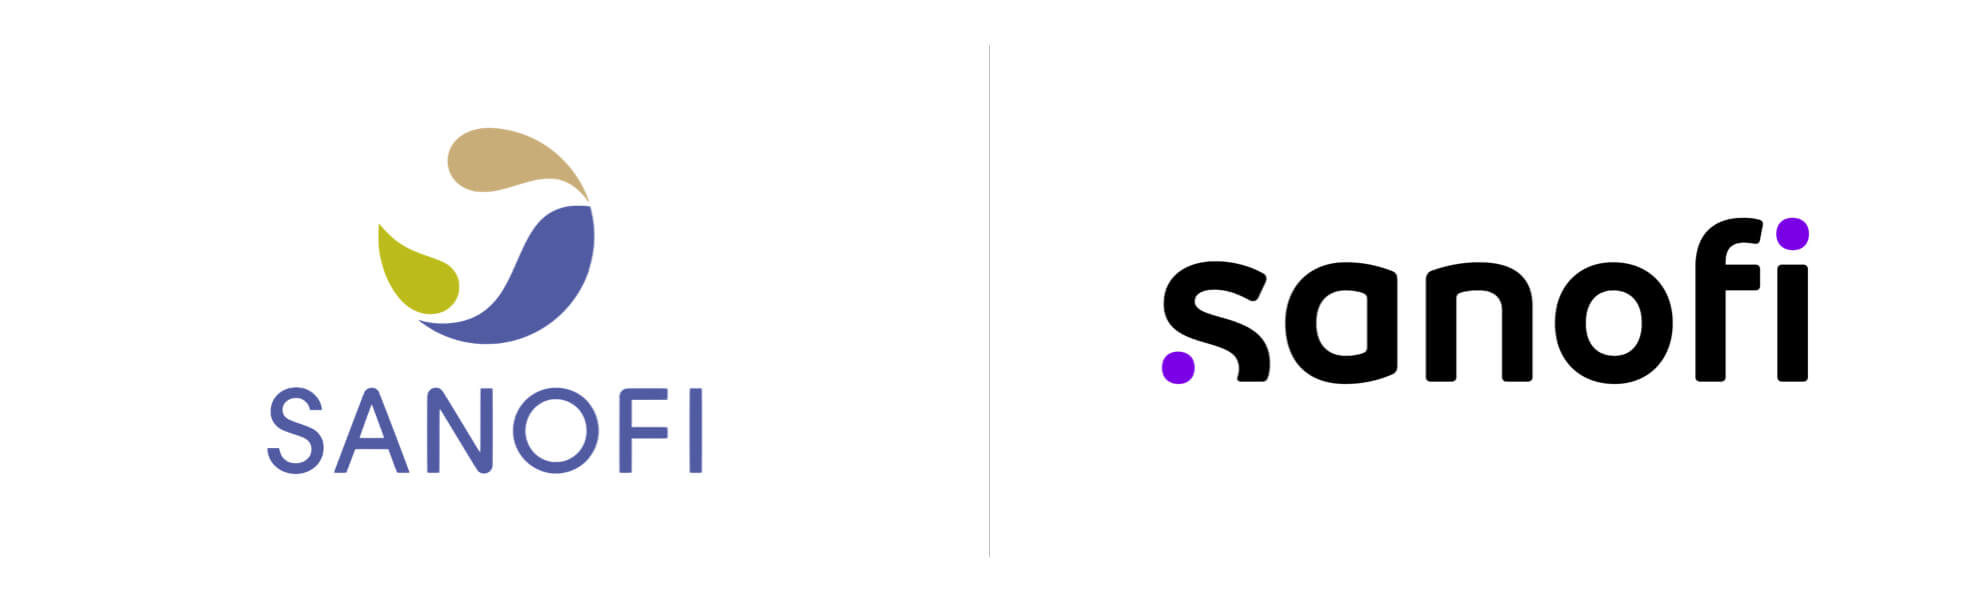 Stare i nowe logo Sanofi